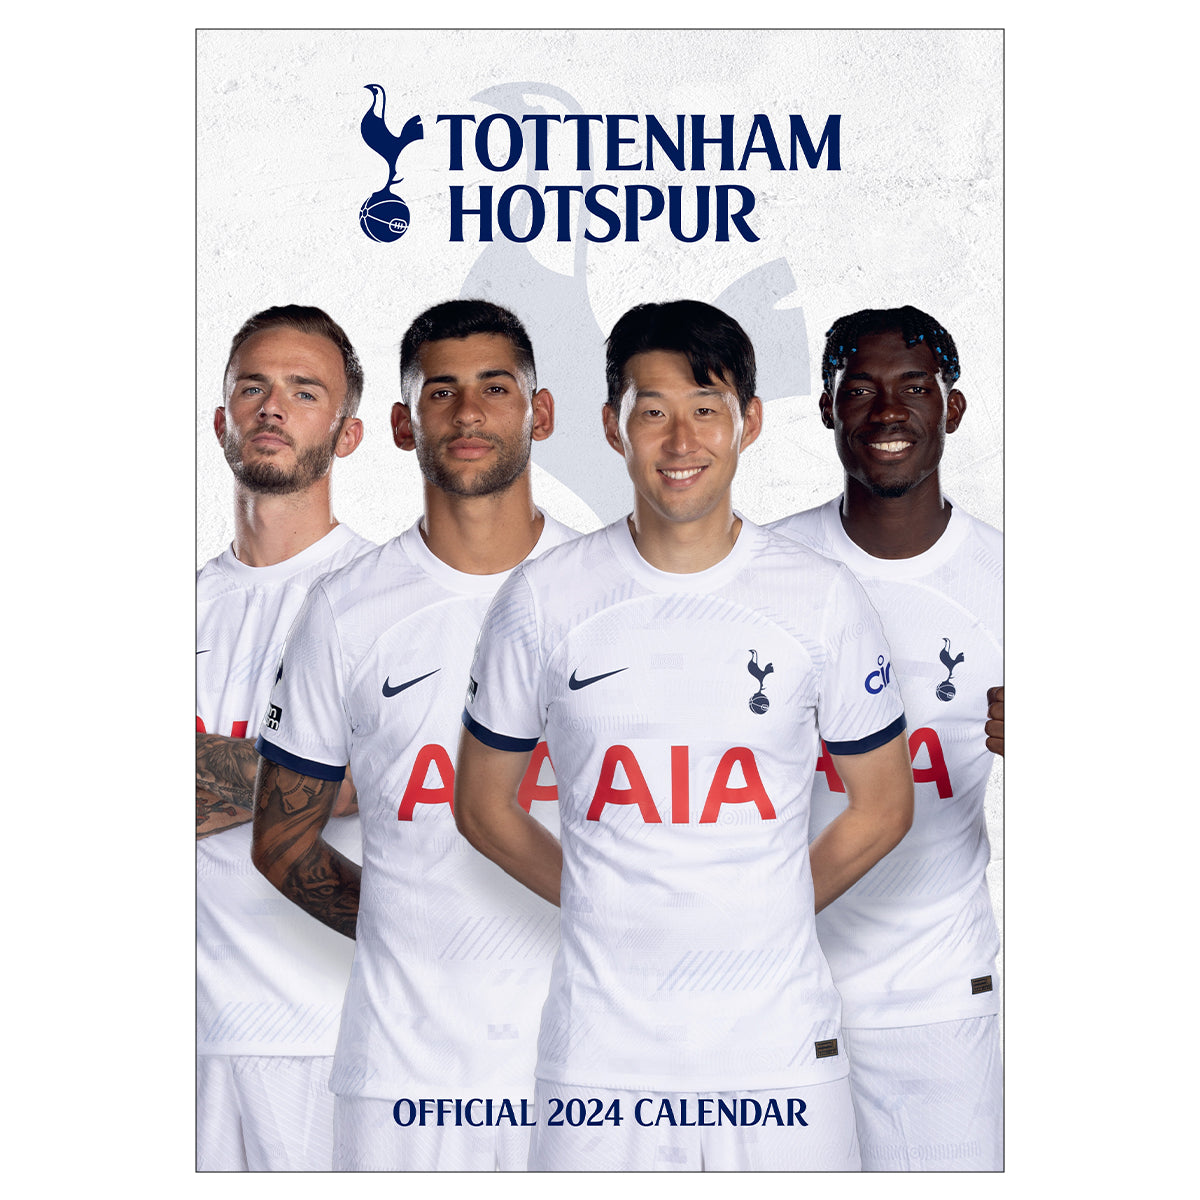 The Official Tottenham Hotspur FC Calendar 2021